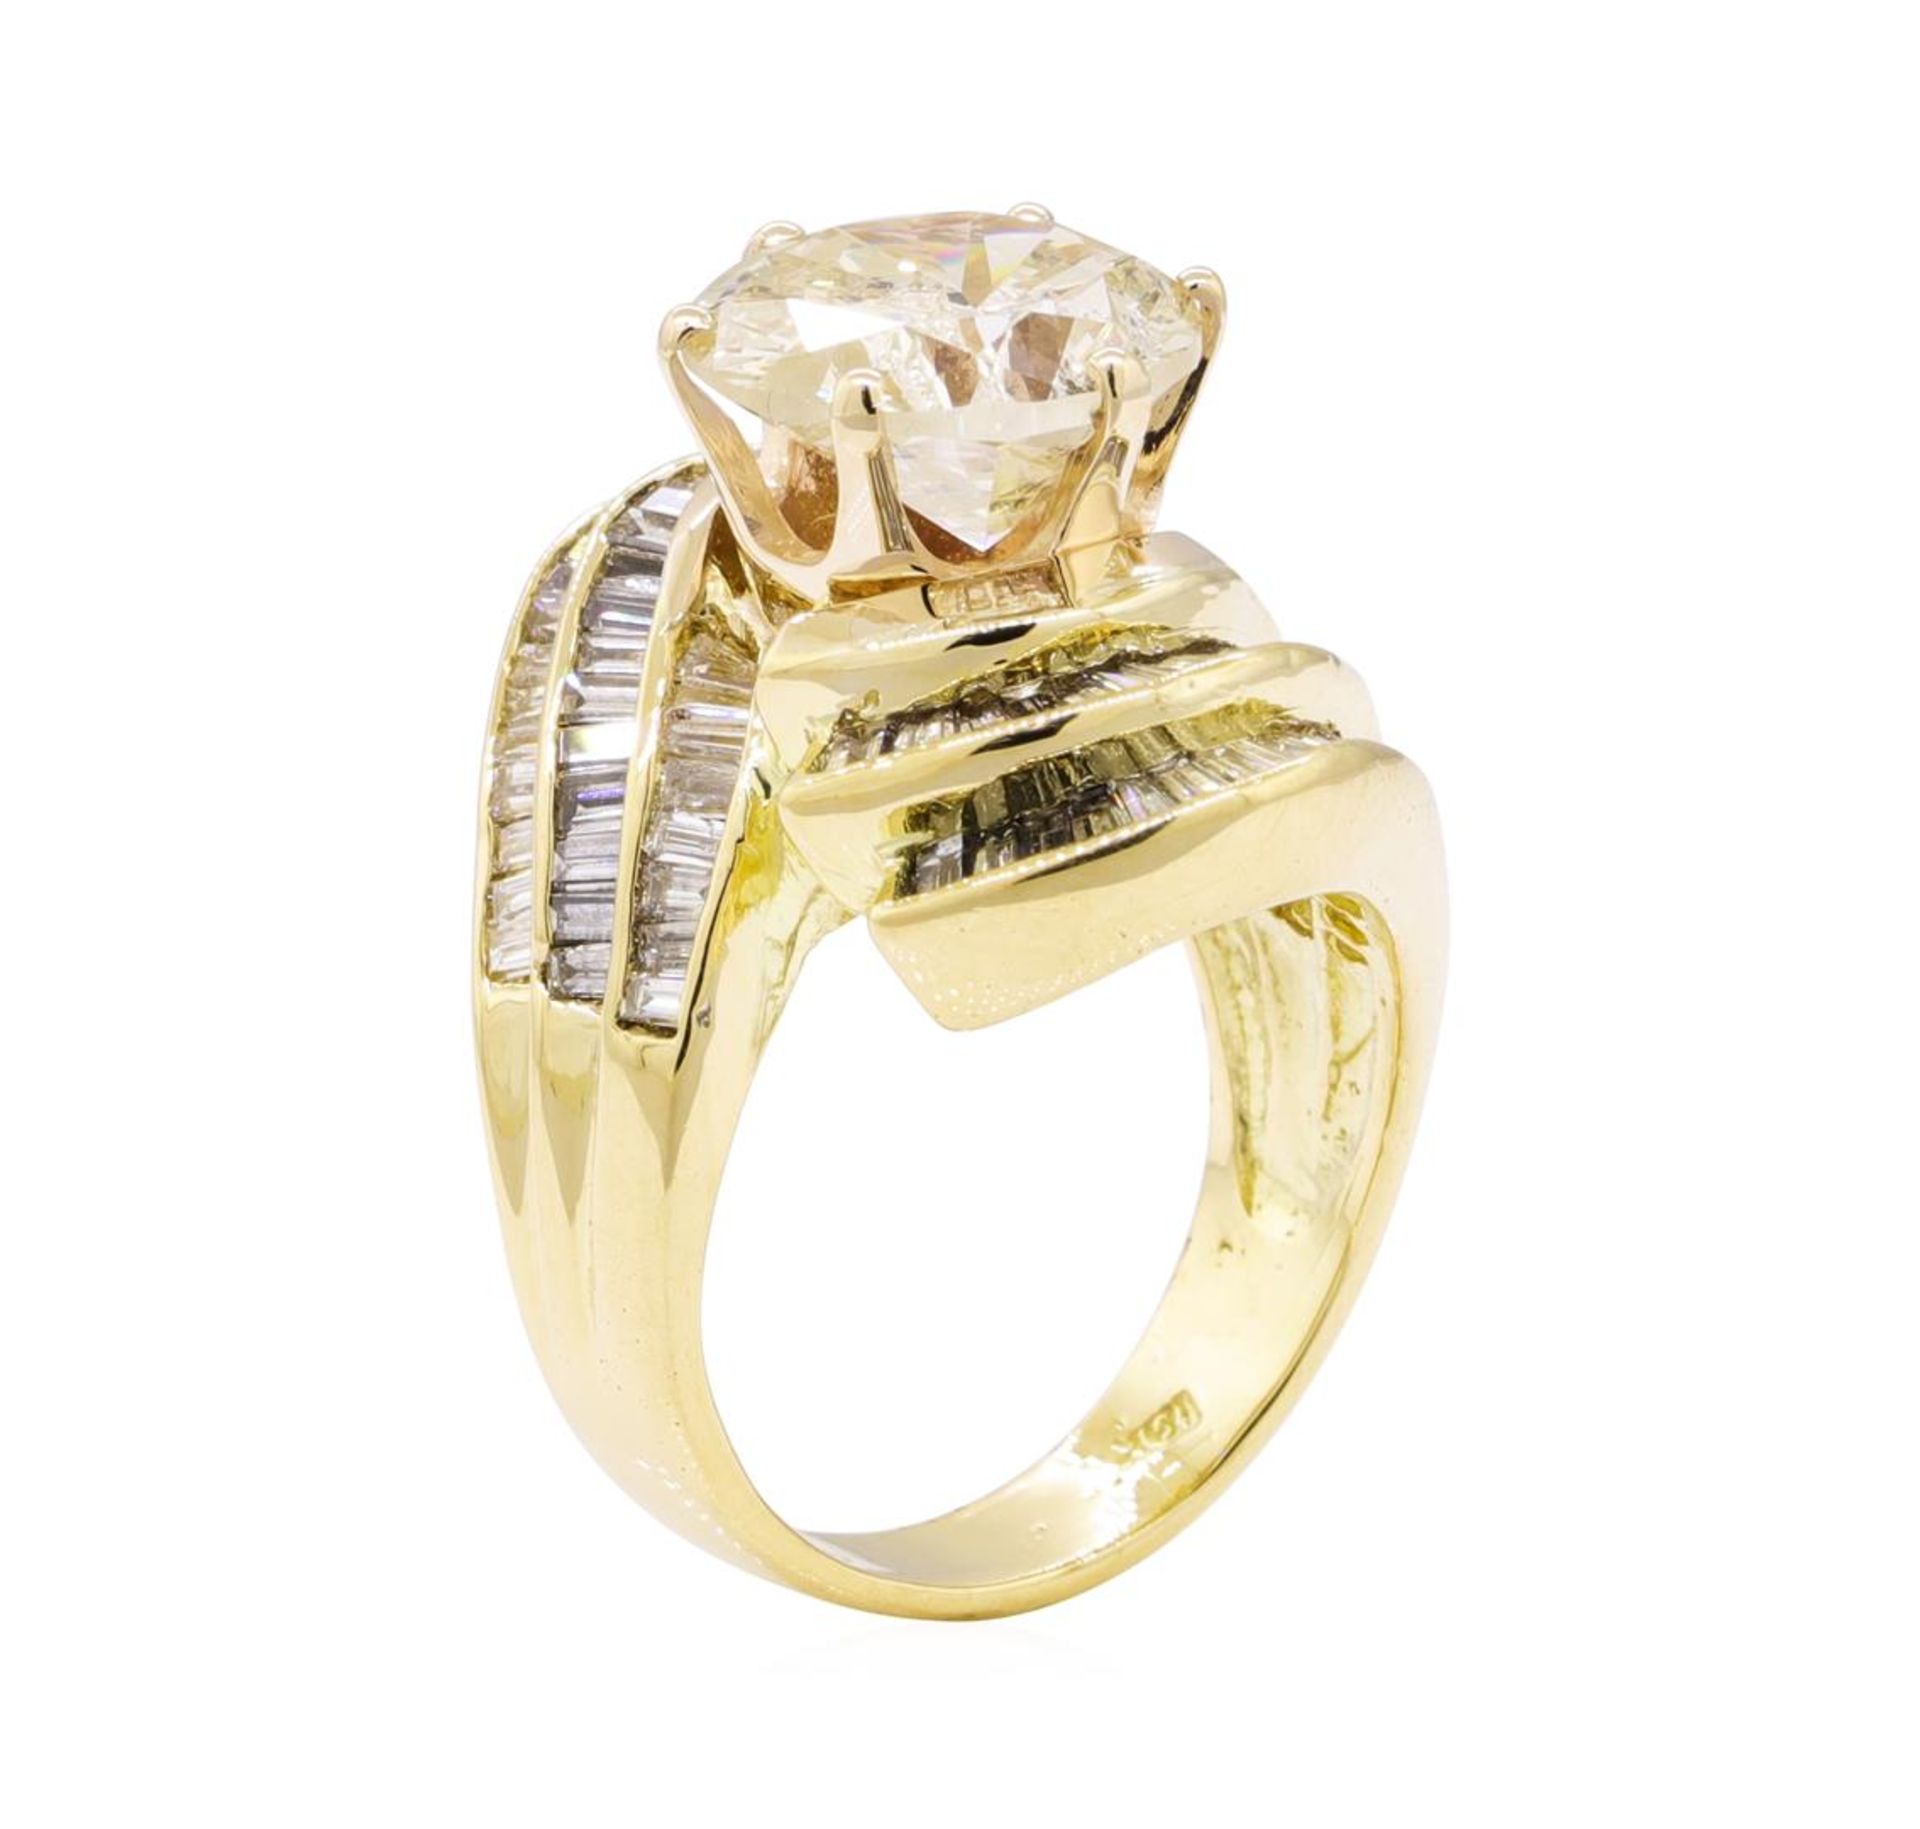 7.51 ctw Diamond Ring - 18KT Yellow Gold - Image 4 of 5